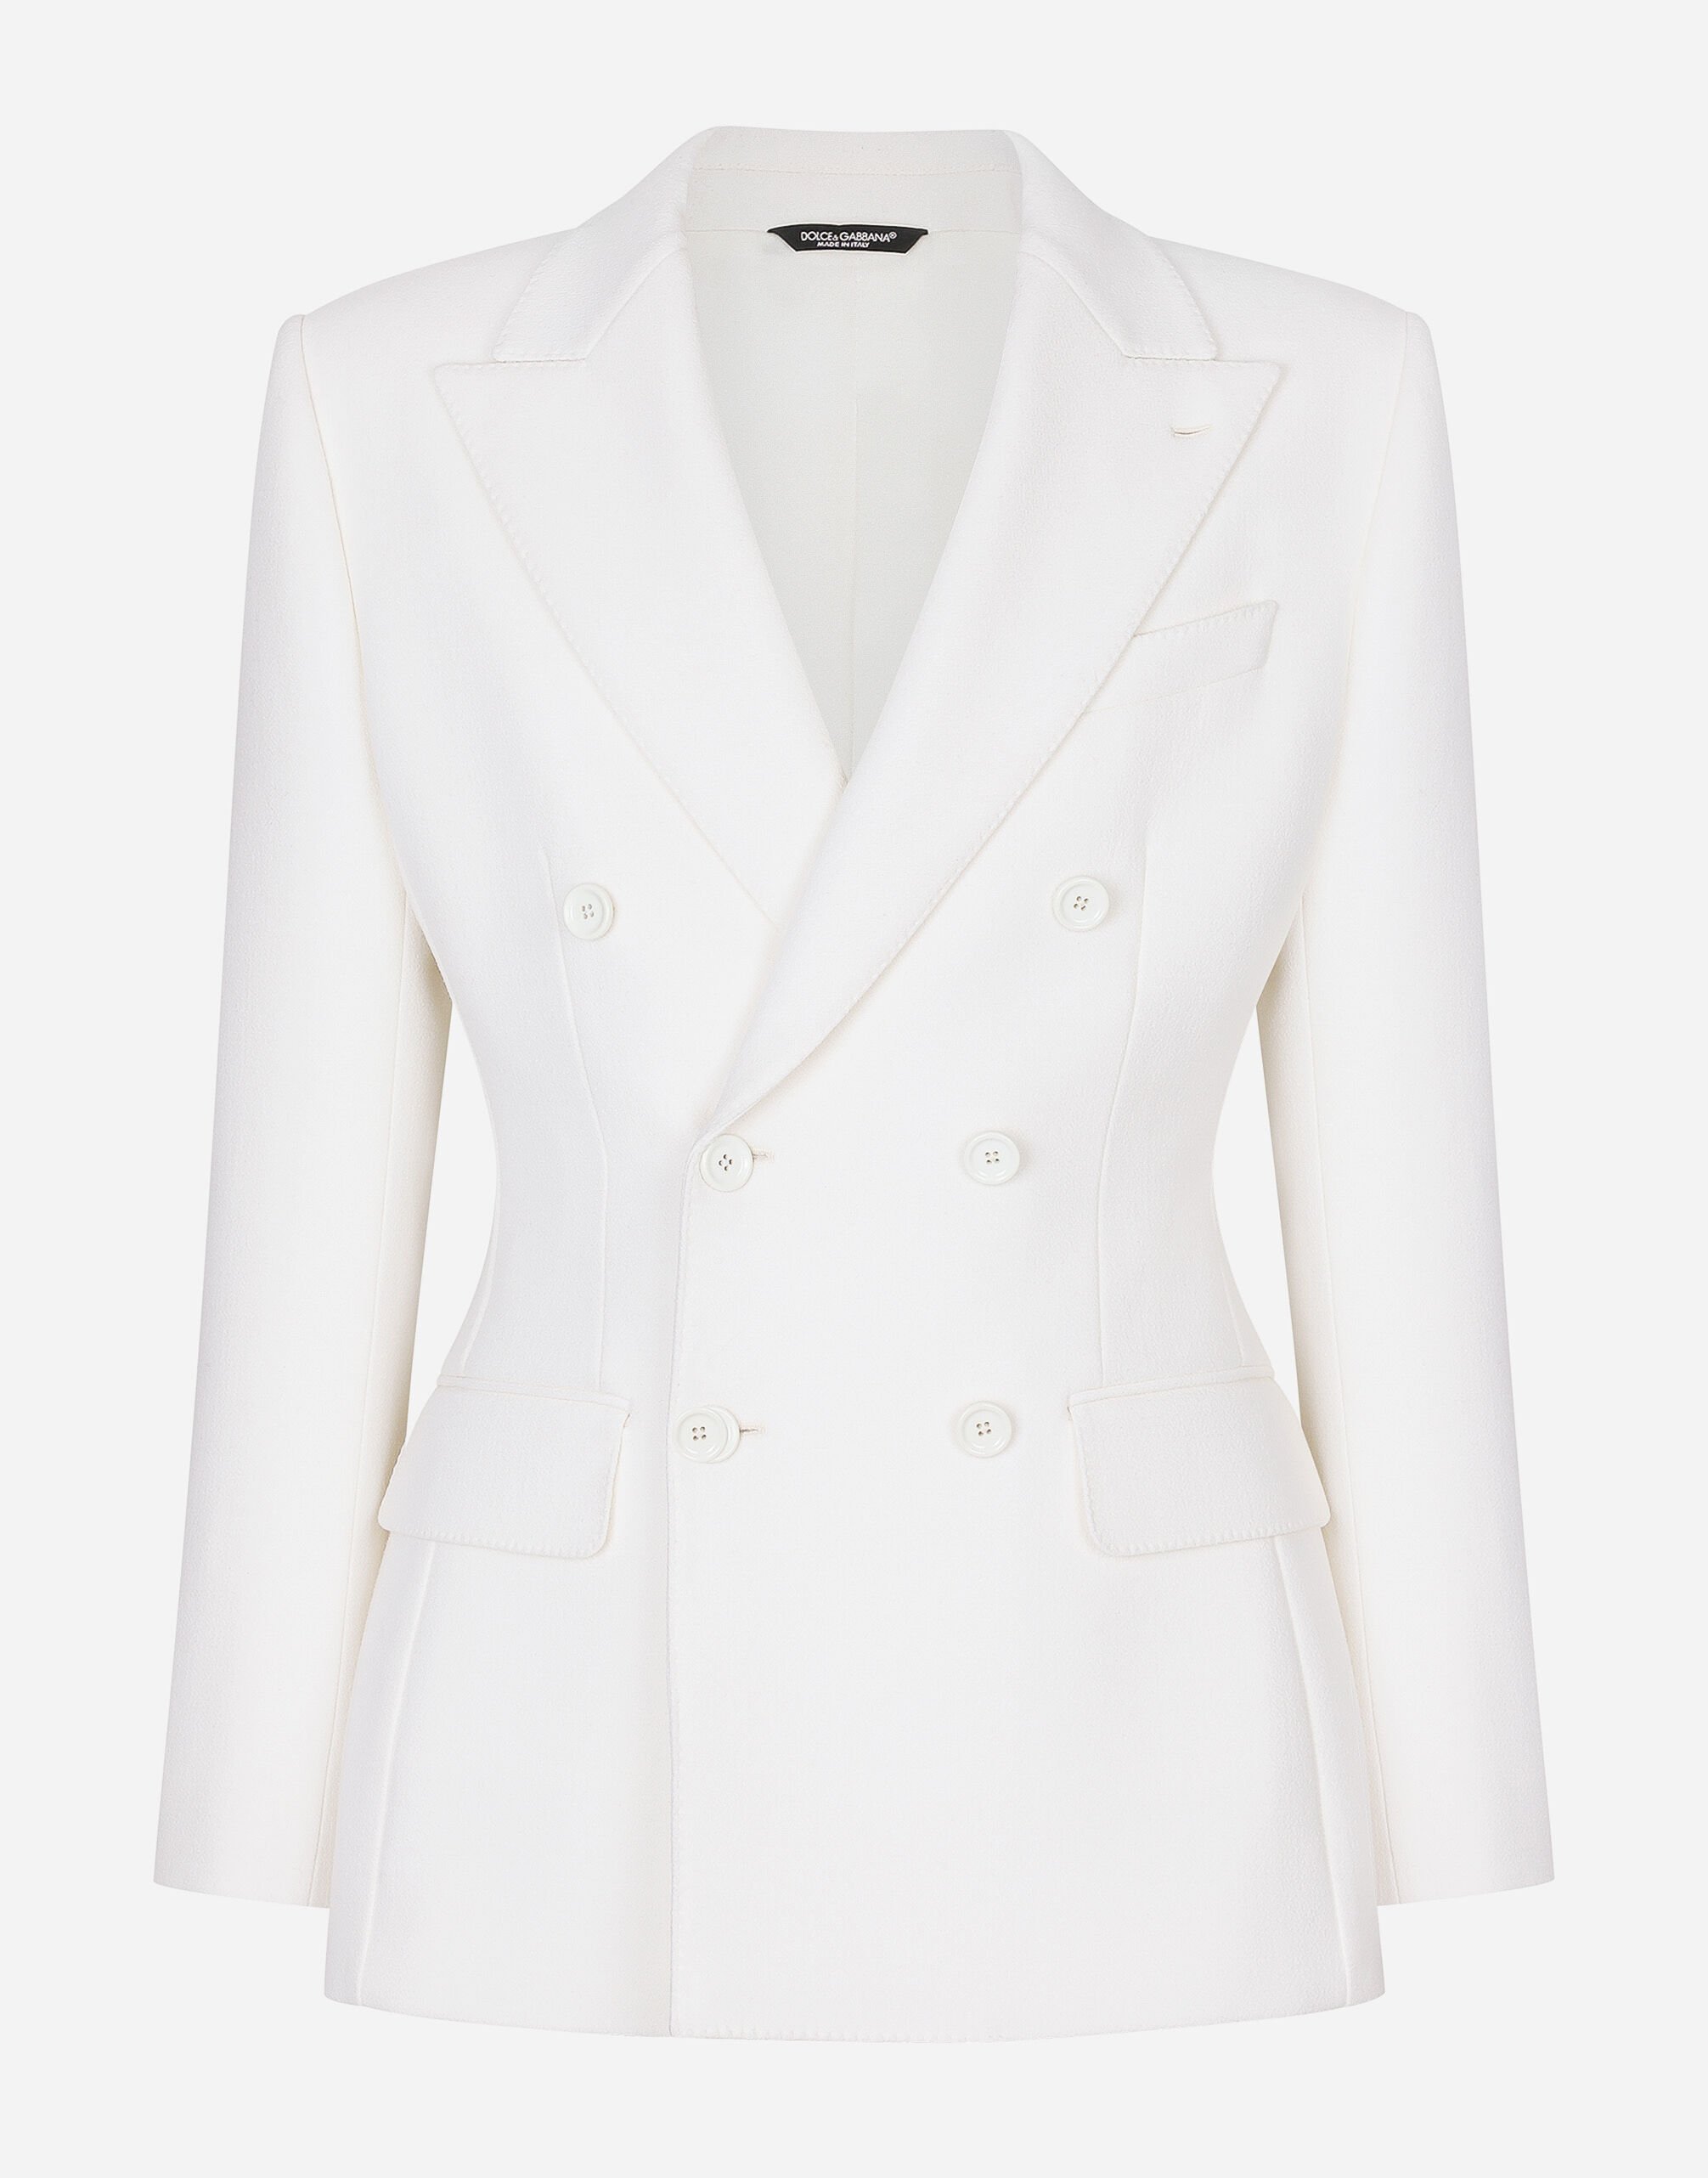 Dolce&Gabbana Double-breasted stretch wool crepe Dolce-fit jacket Black G710PTFU26Z